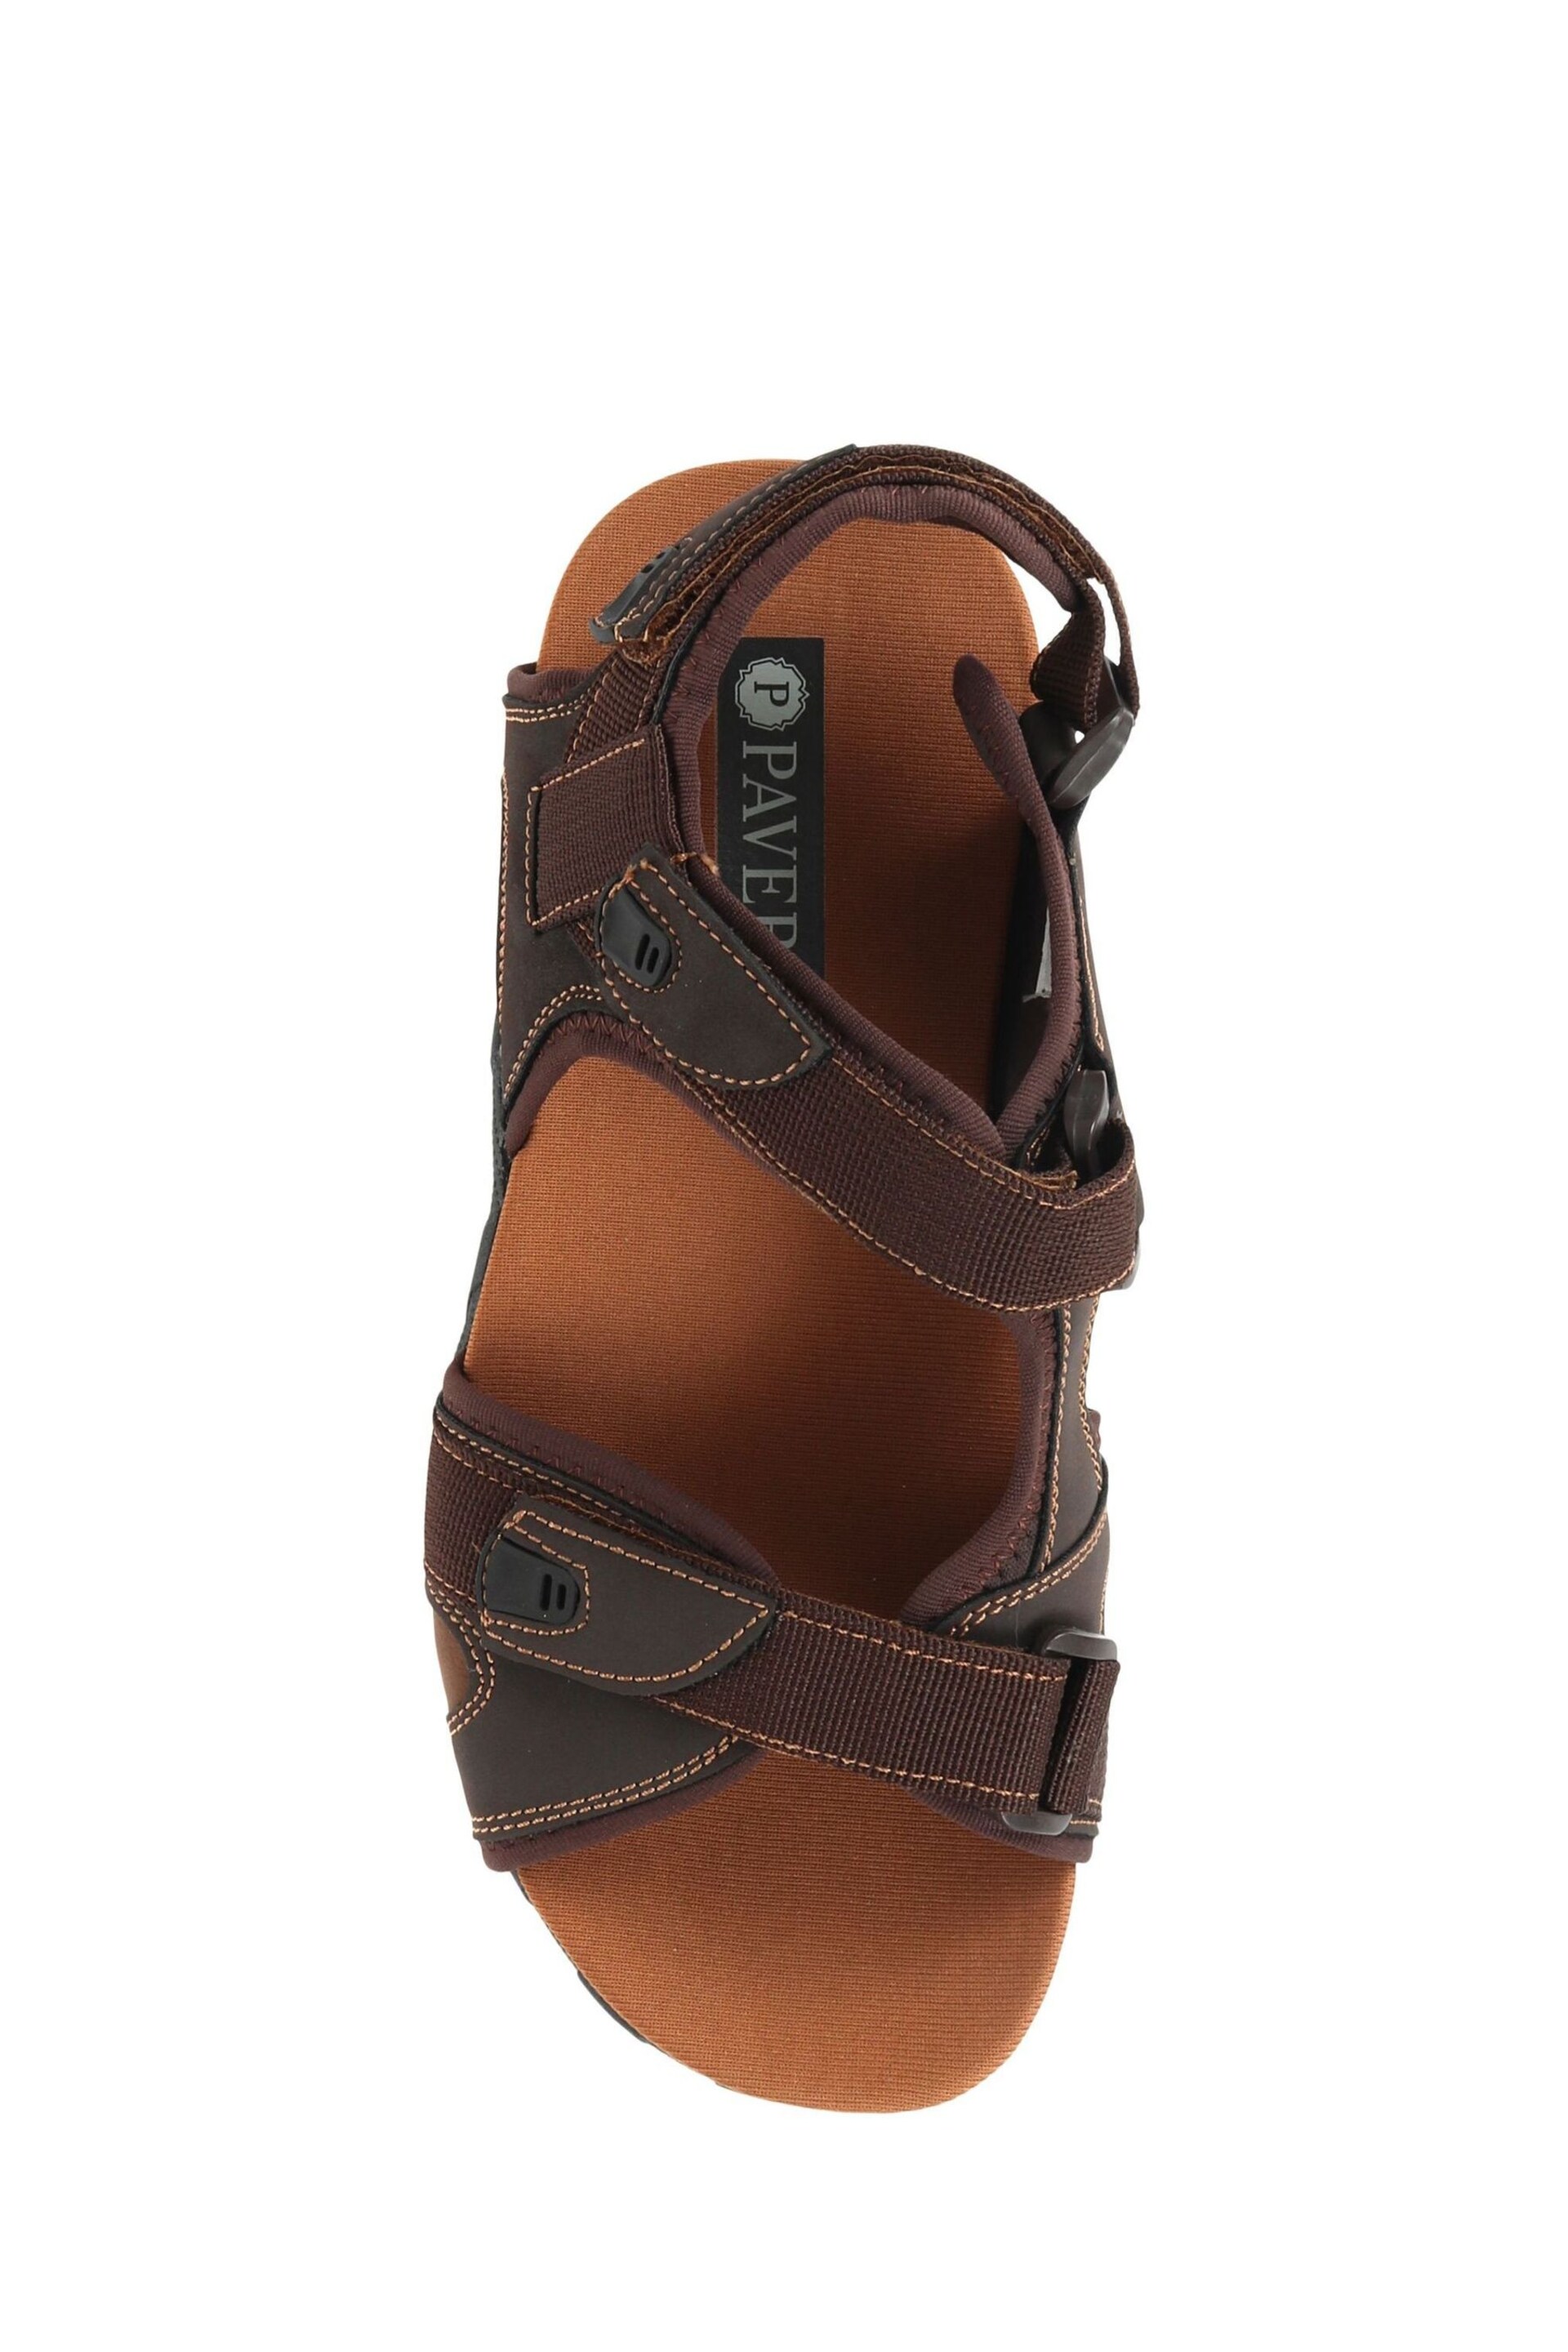 Pavers Fully Adjustable Walking Brown Sandals - Image 5 of 5